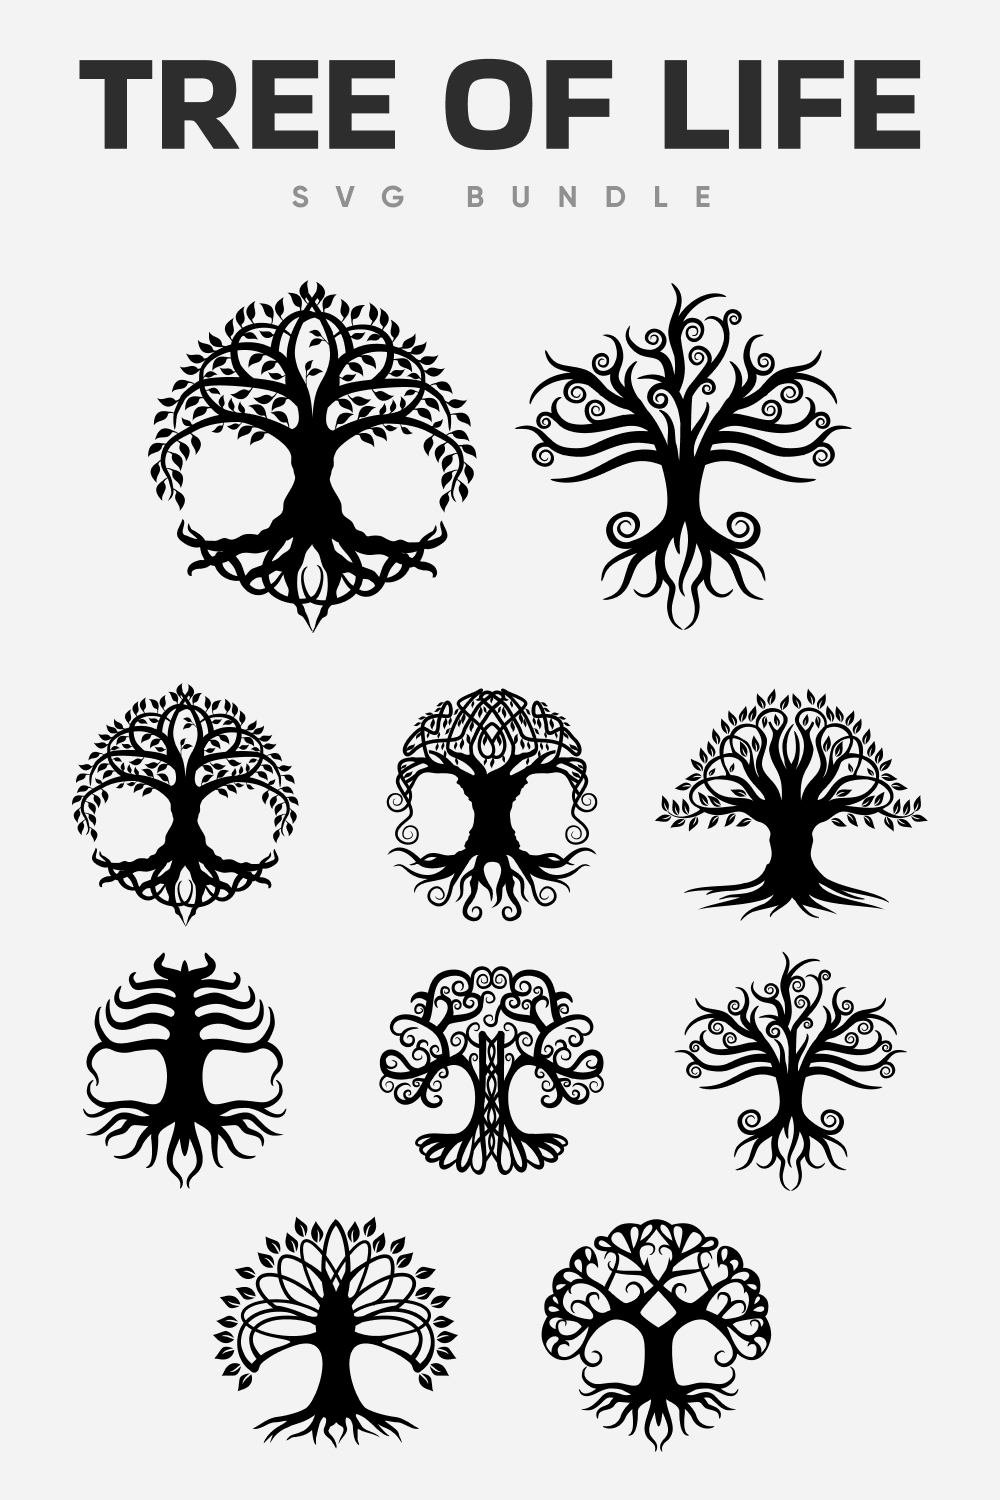 Interesting Tree of life SVG bundle.